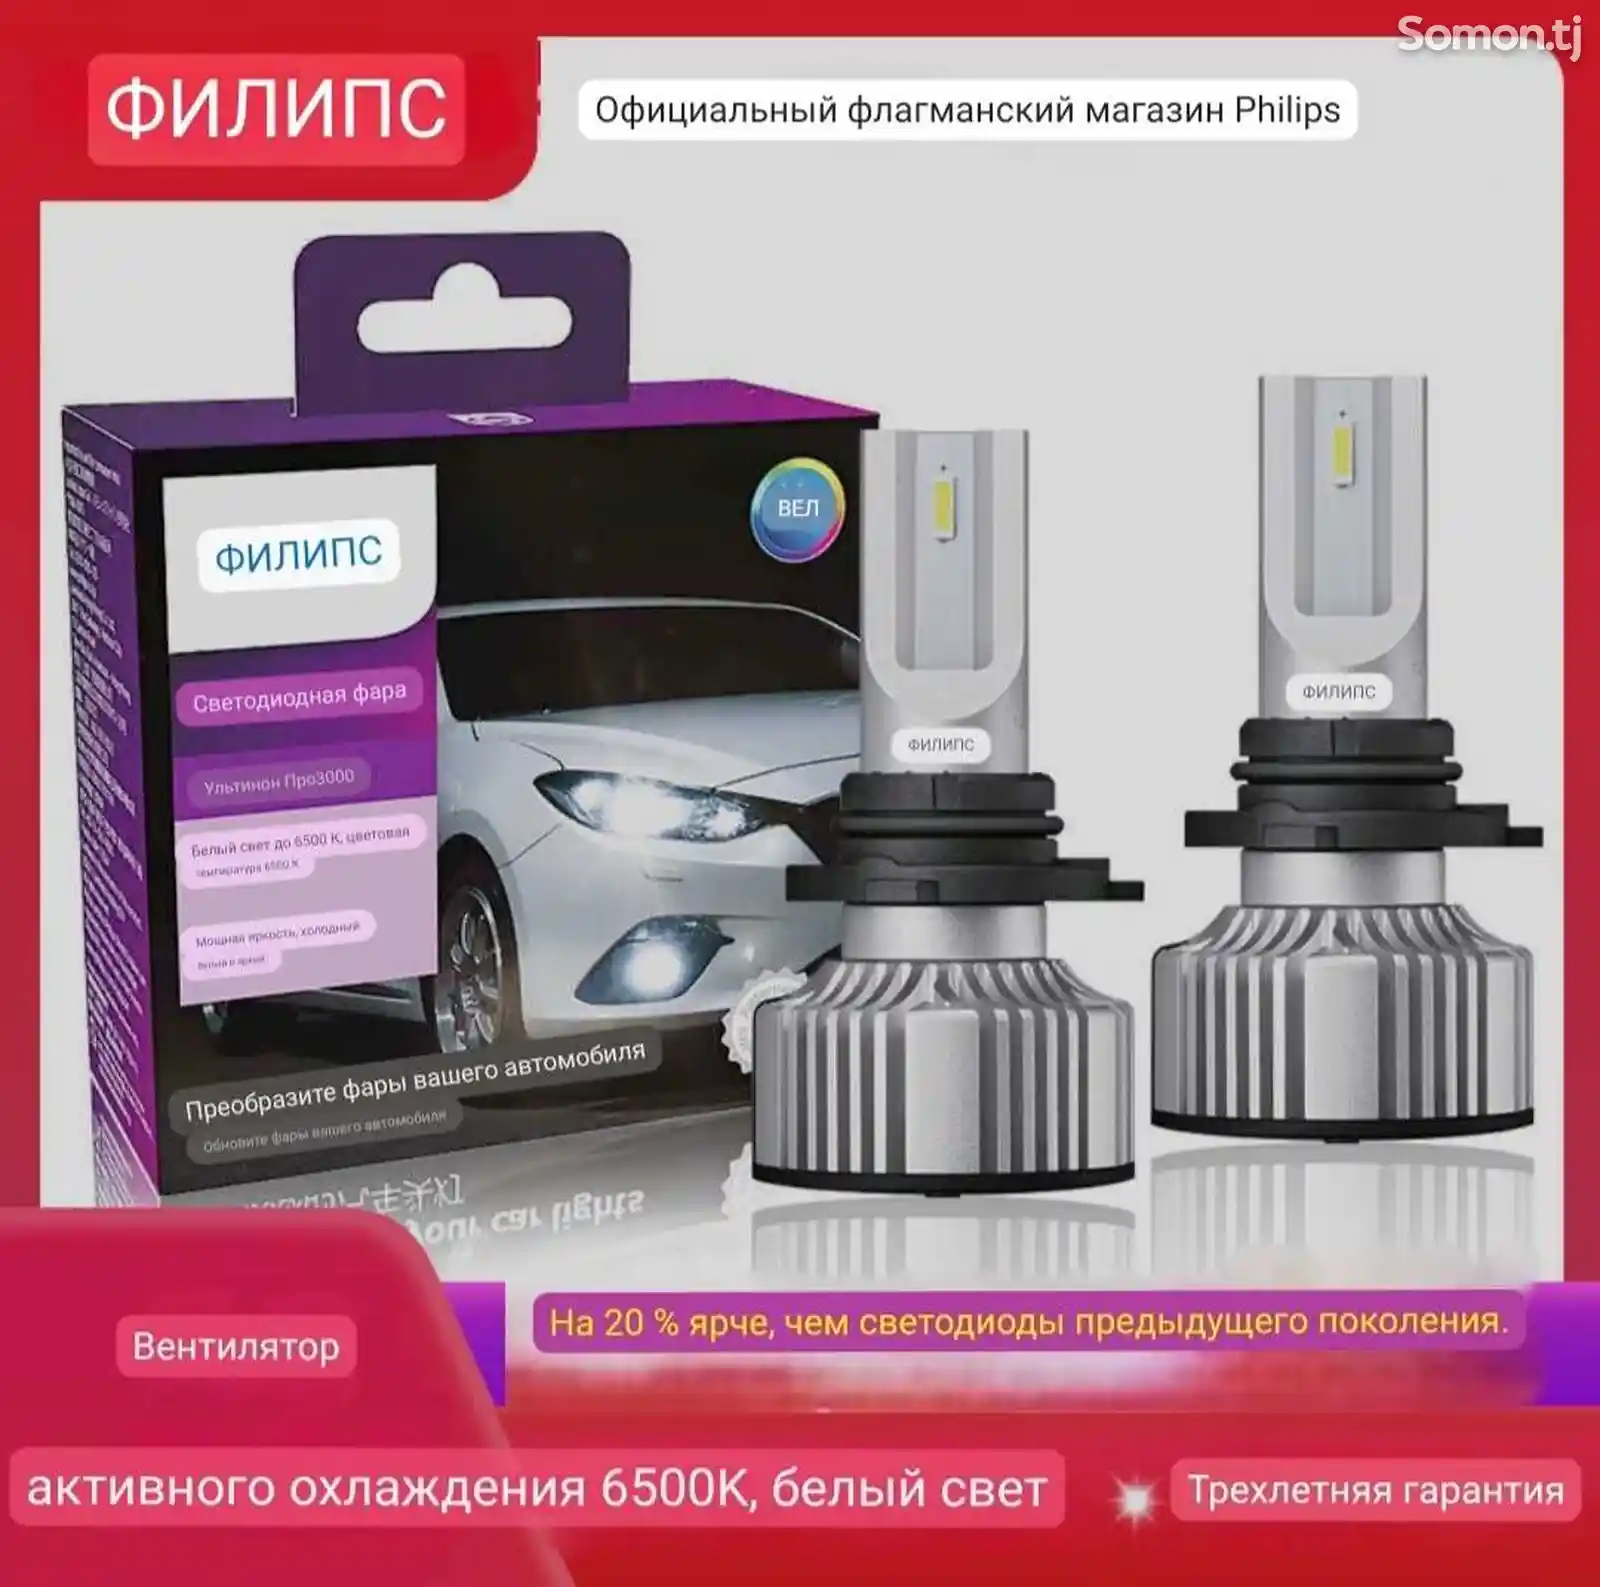 Светодиодные лампы Philips ultinon pro3000 на марки Toyota на заказ-2